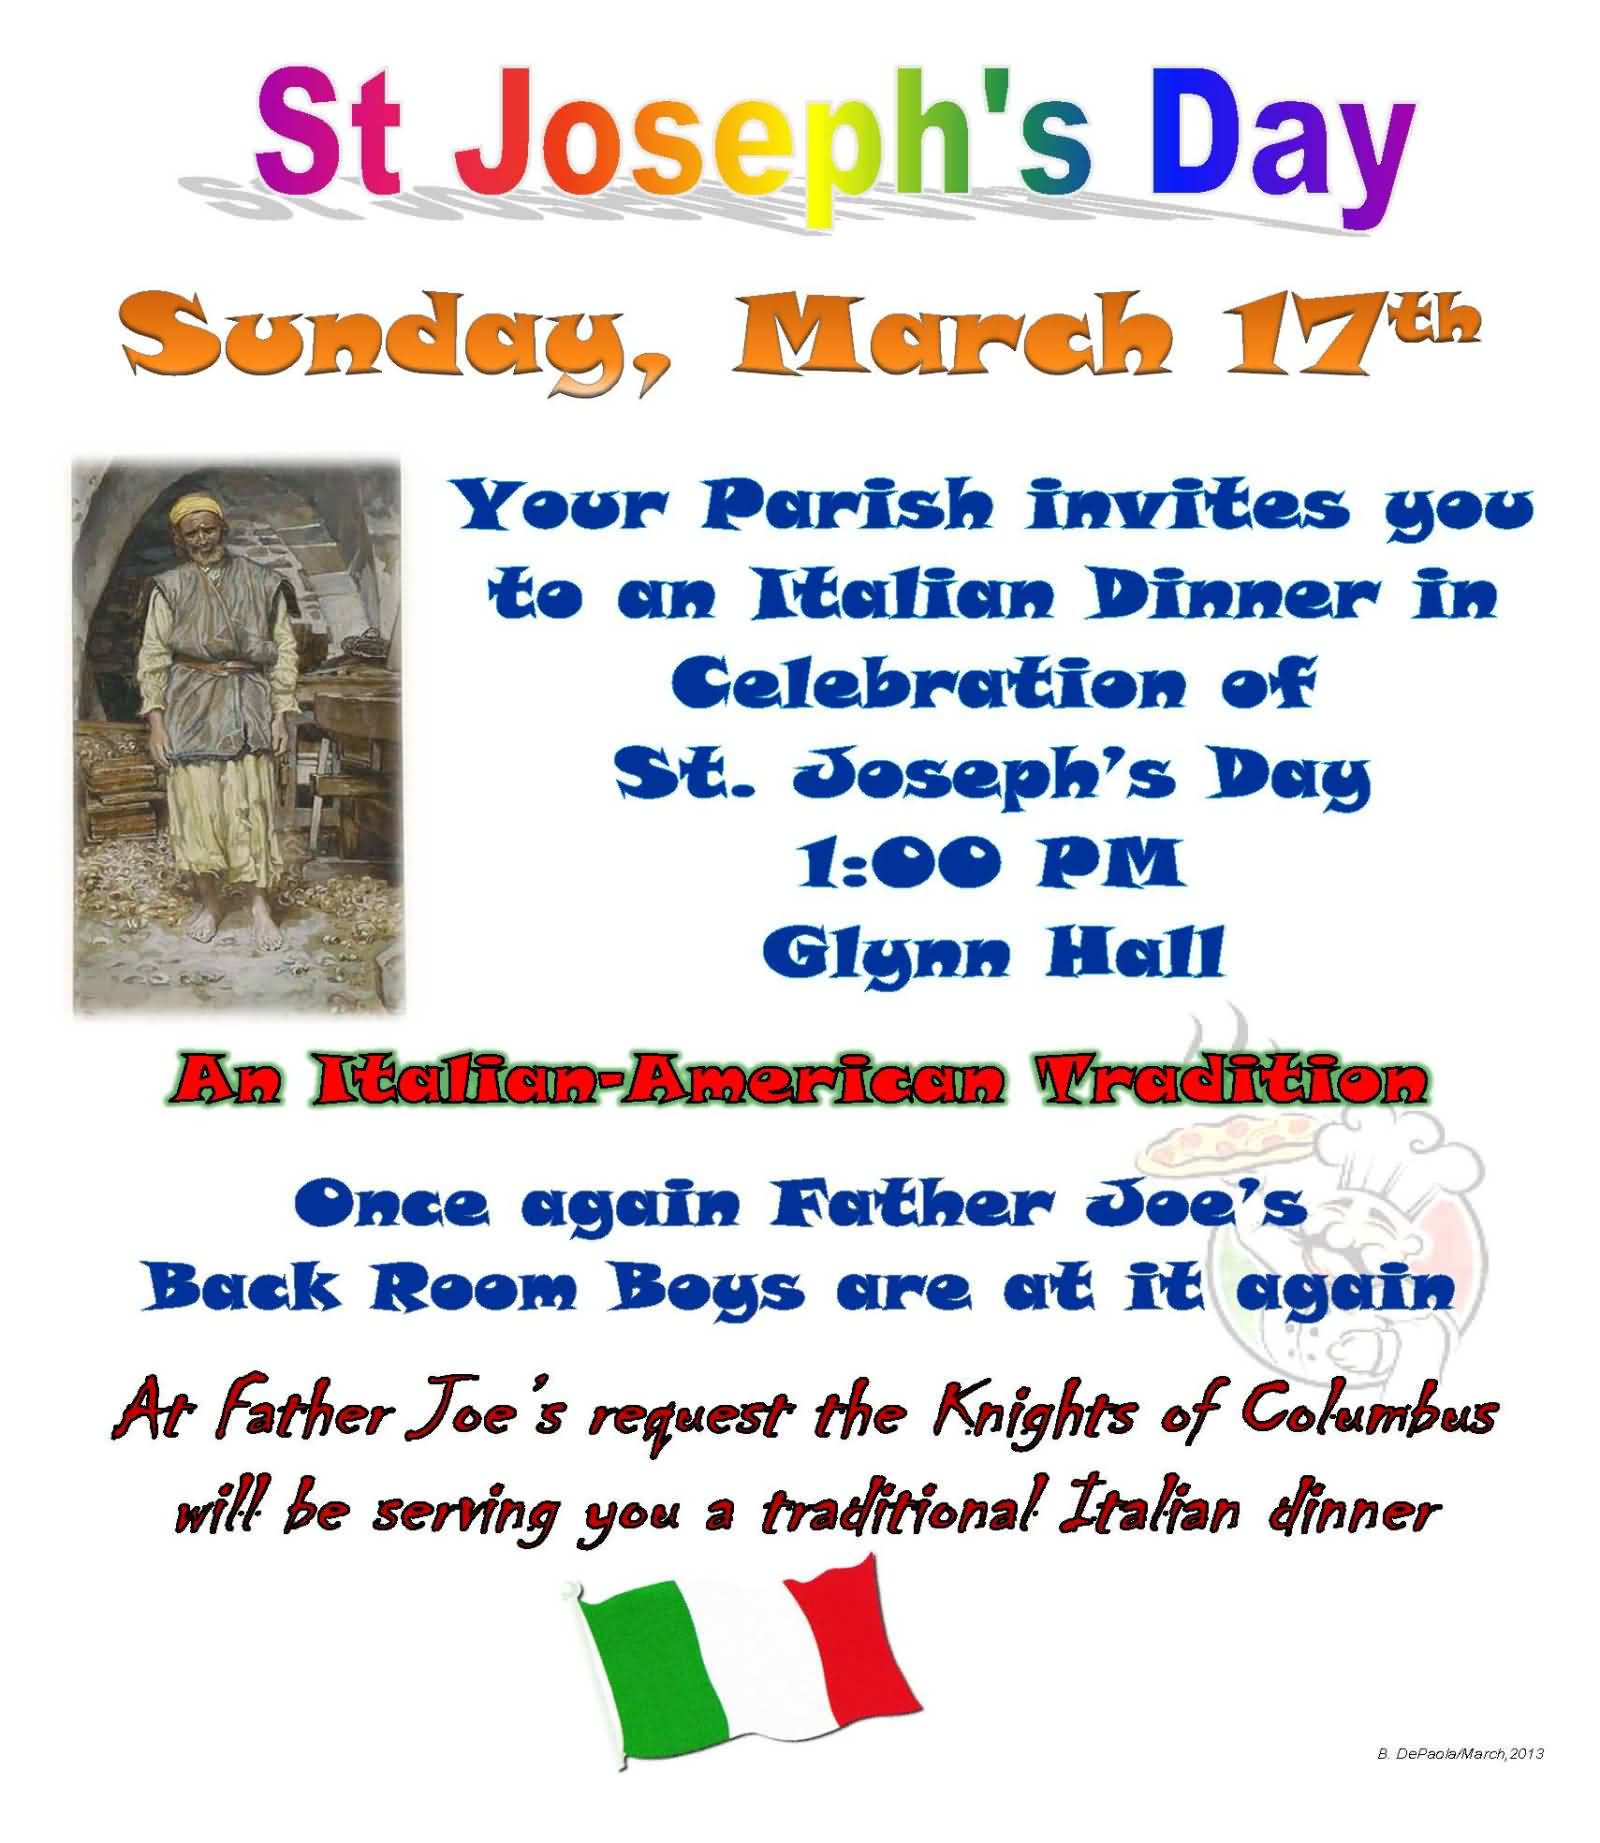 St. Joseph's Day March 17h